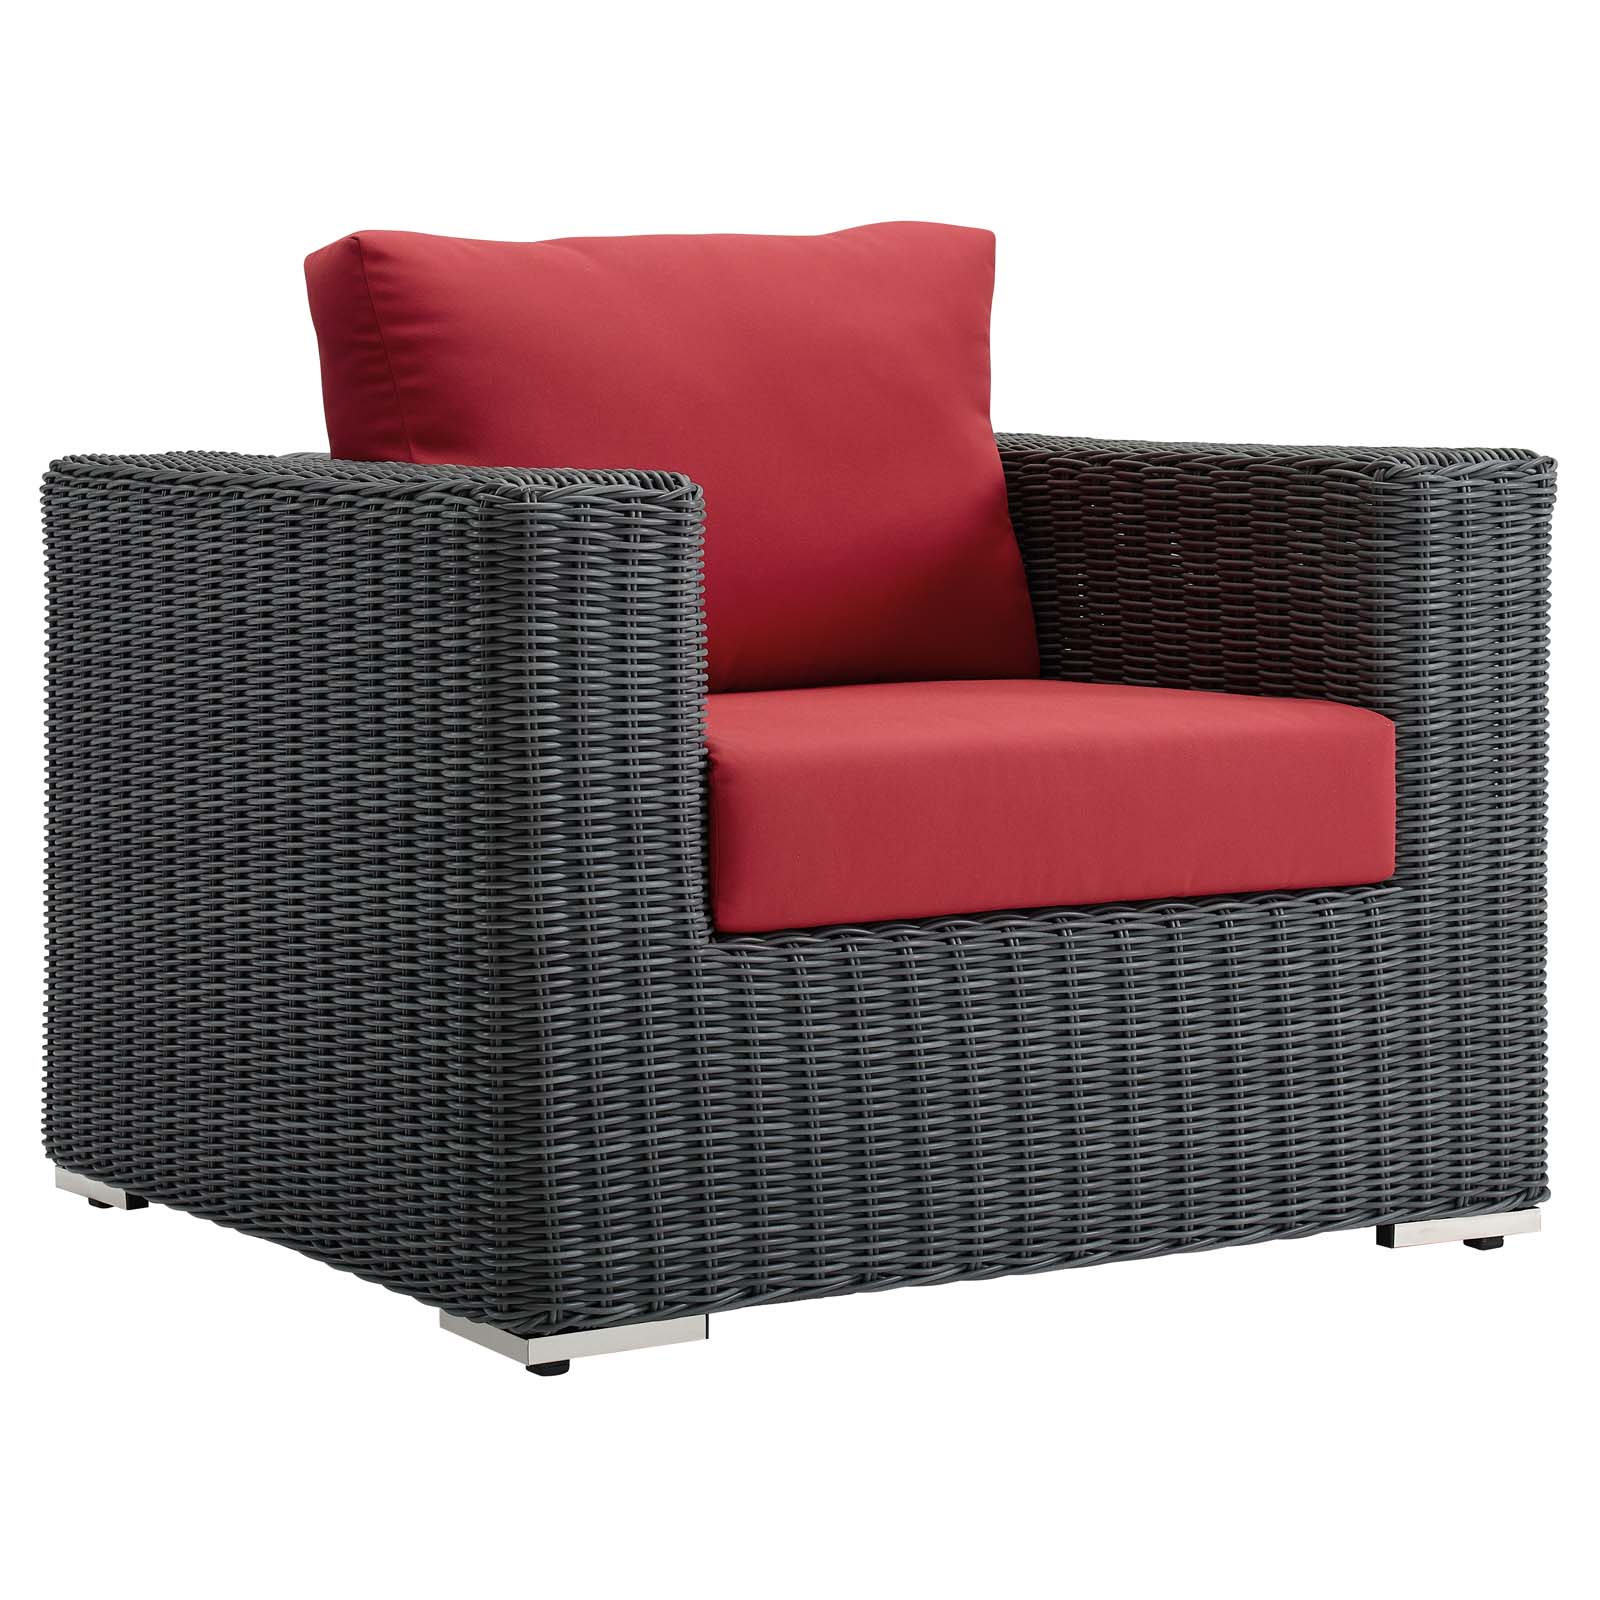 Modern Contemporary Urban Design Outdoor Patio Balcony Garden Furniture Lounge Chair Armchair, Sunbrella Rattan Wicker, Red - image 1 of 4